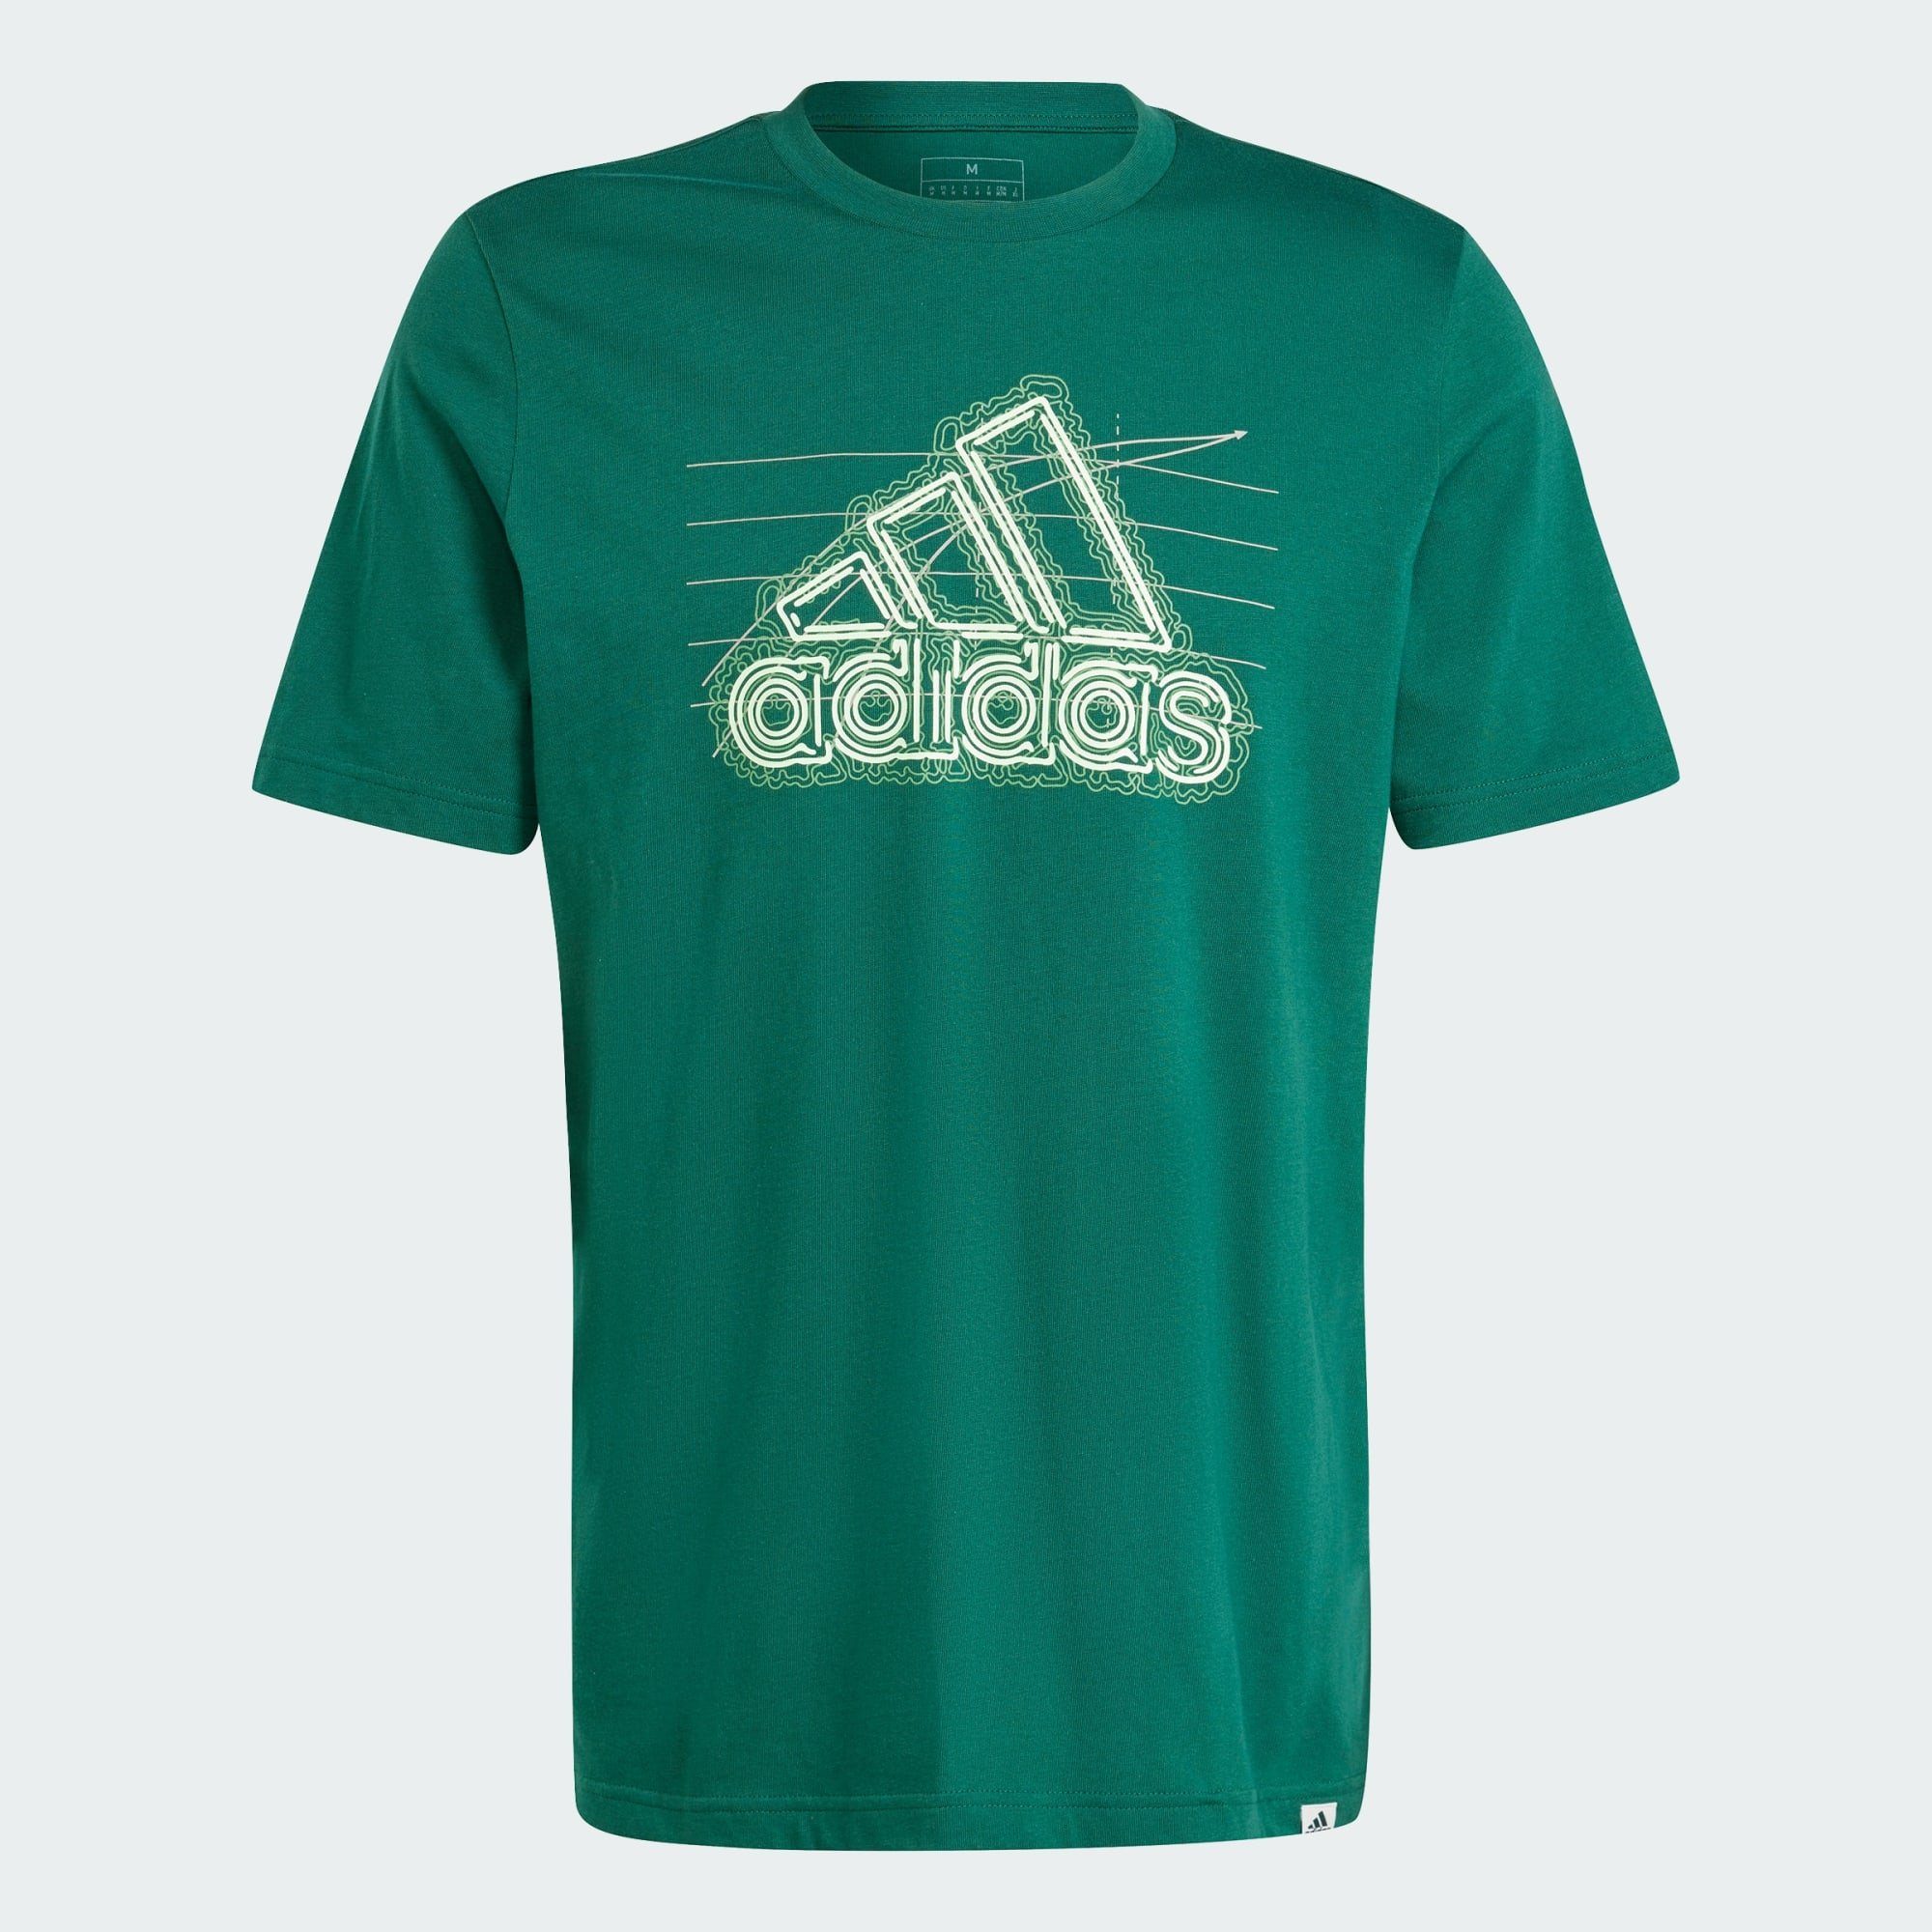 T-Shirt Sportswear T-SHIRT Collegiate adidas GROWTH Green GRAPHIC BADGE